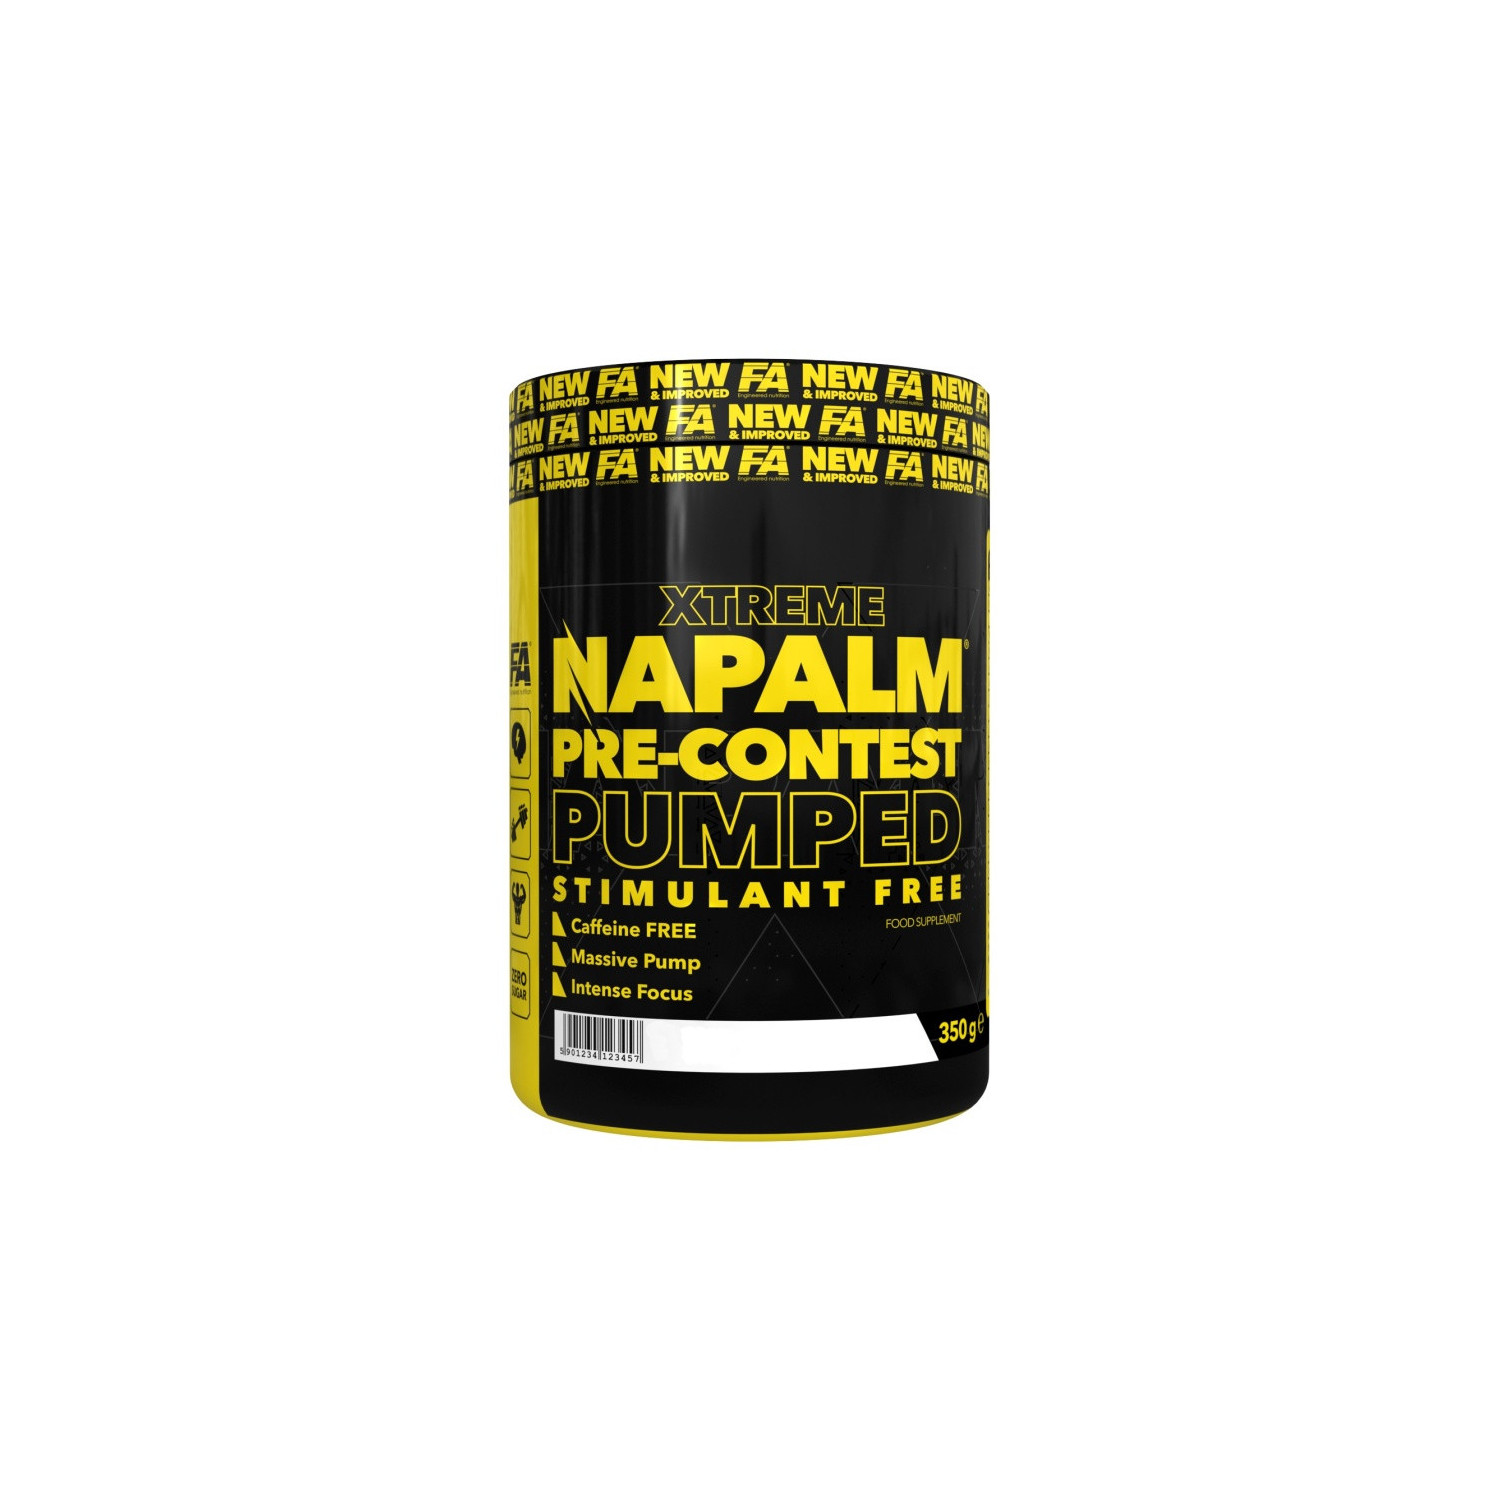 NAPALM Pre-contest pumped stimulant free 350g